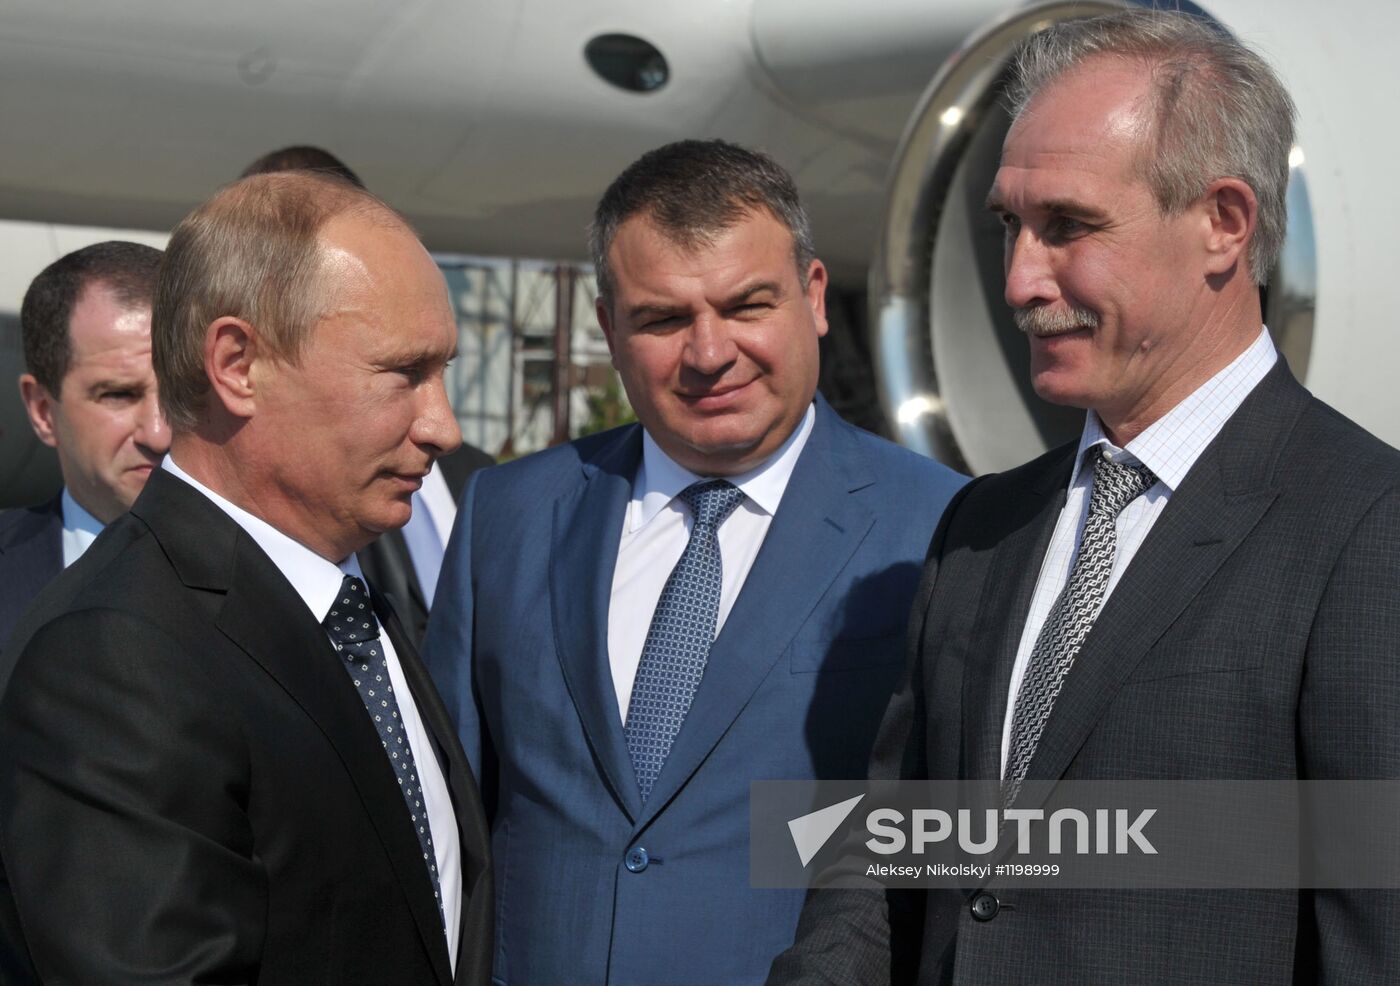 Vladimir Putin arrives in Ulyanovsk region on working visit